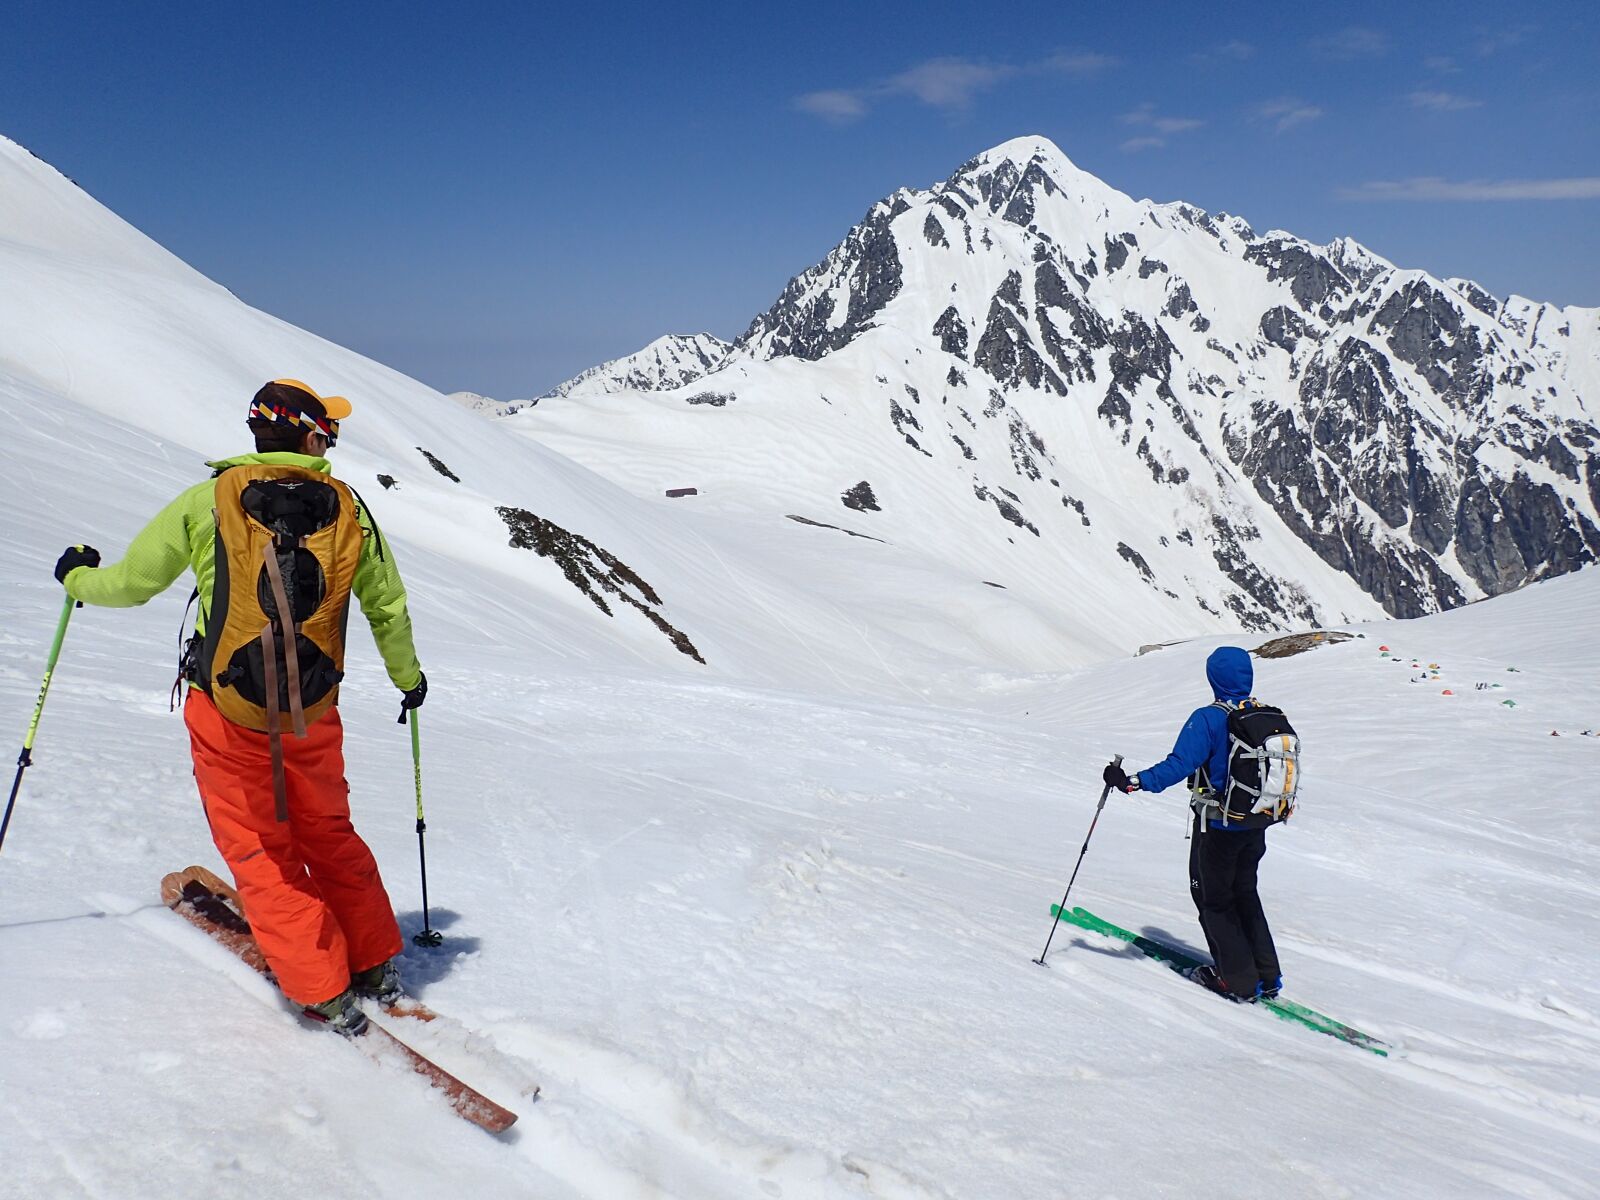 Olympus TG-4 sample photo. Mountain skiing, alps, snow photography